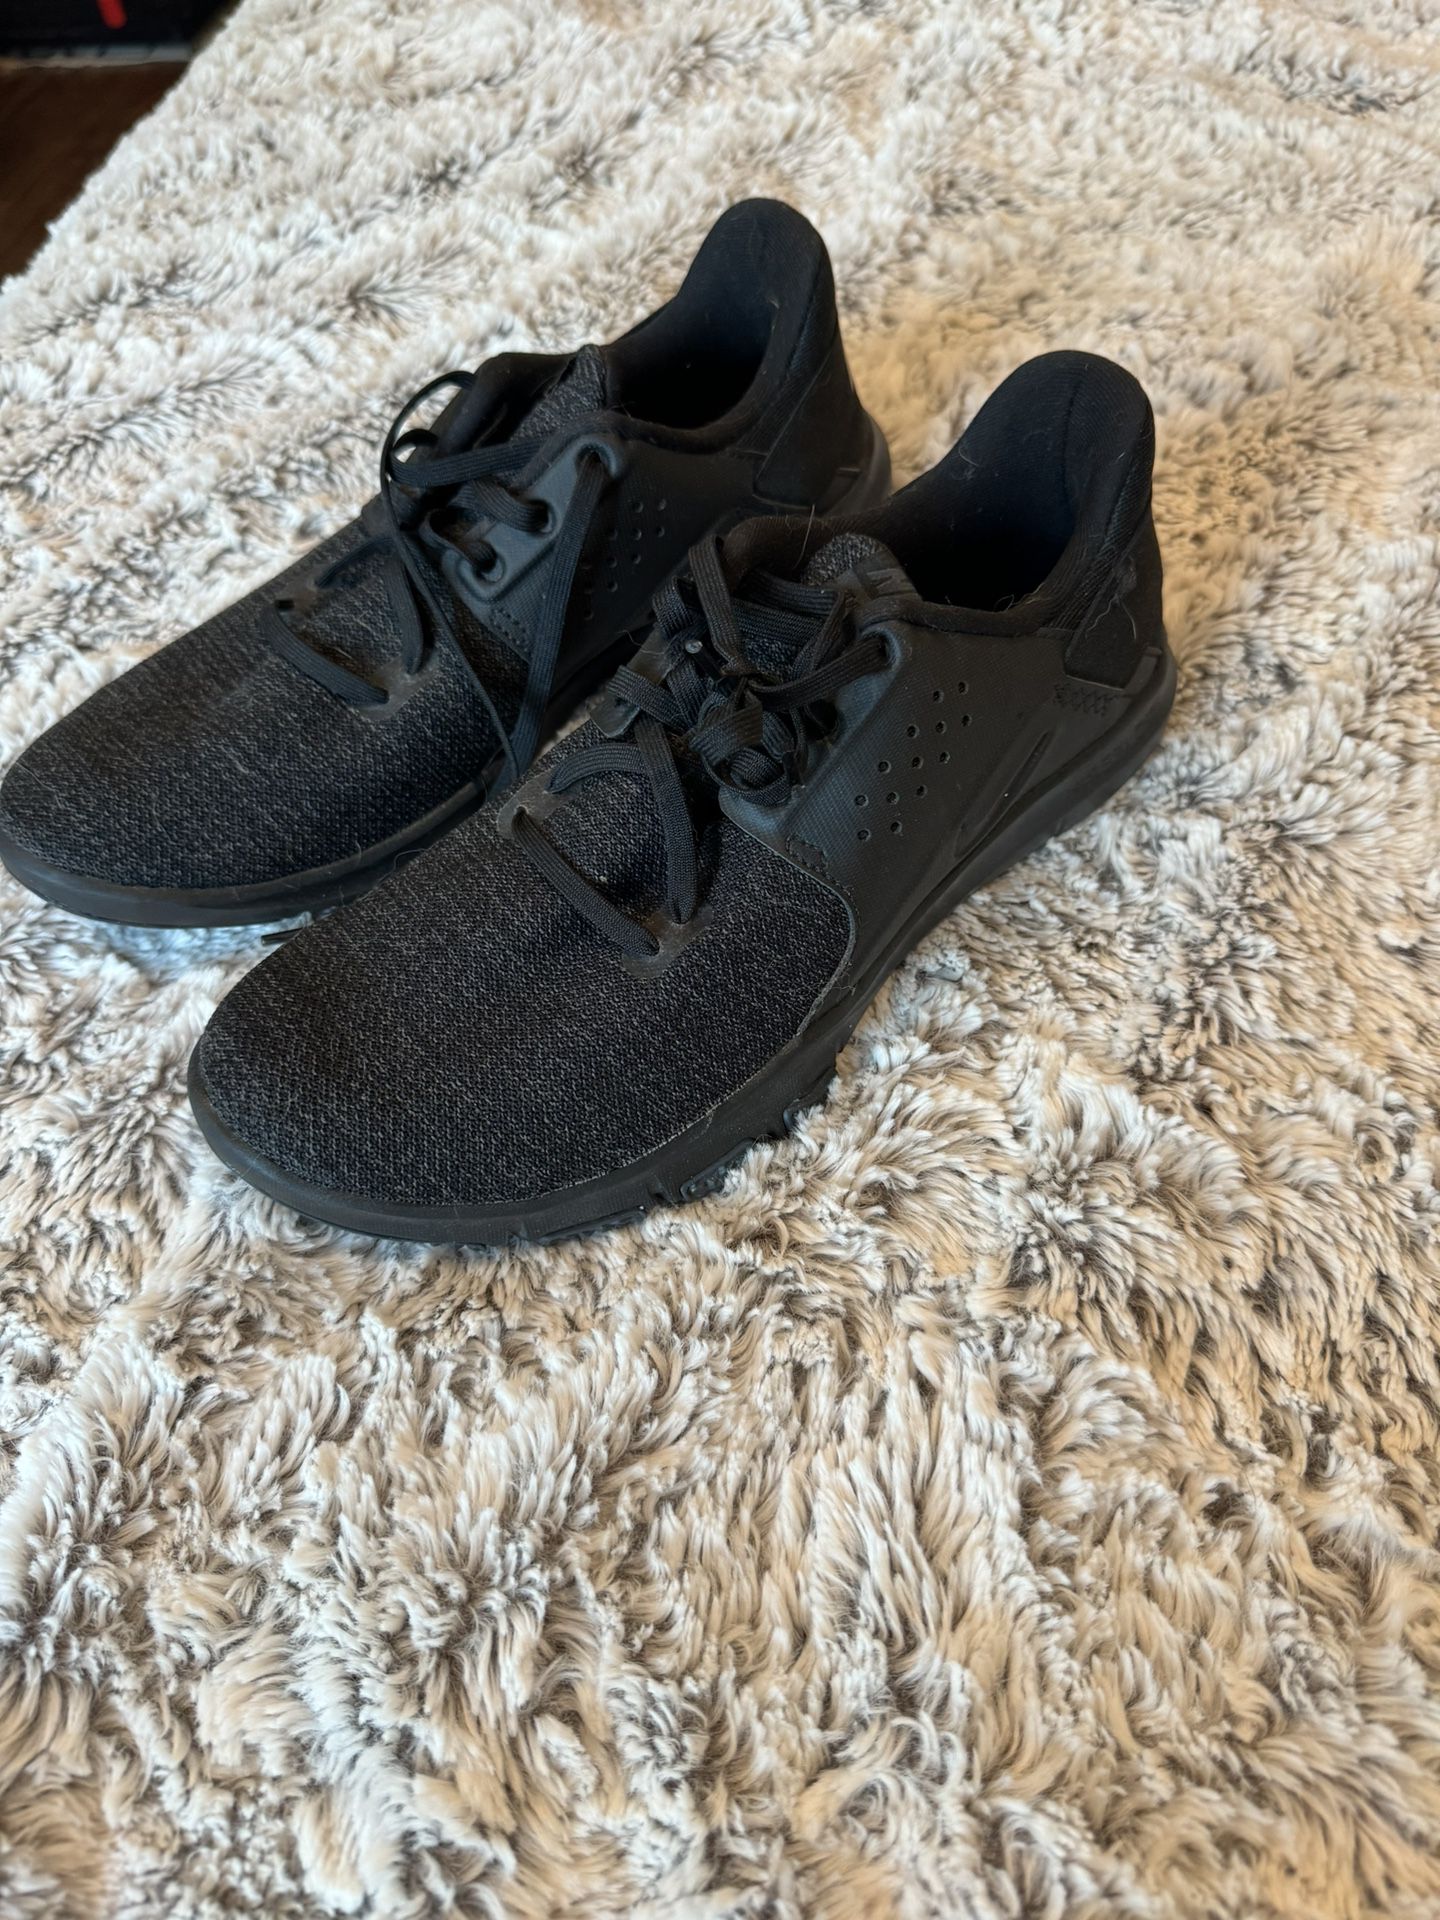 Men’s Nike Shoes 9.5